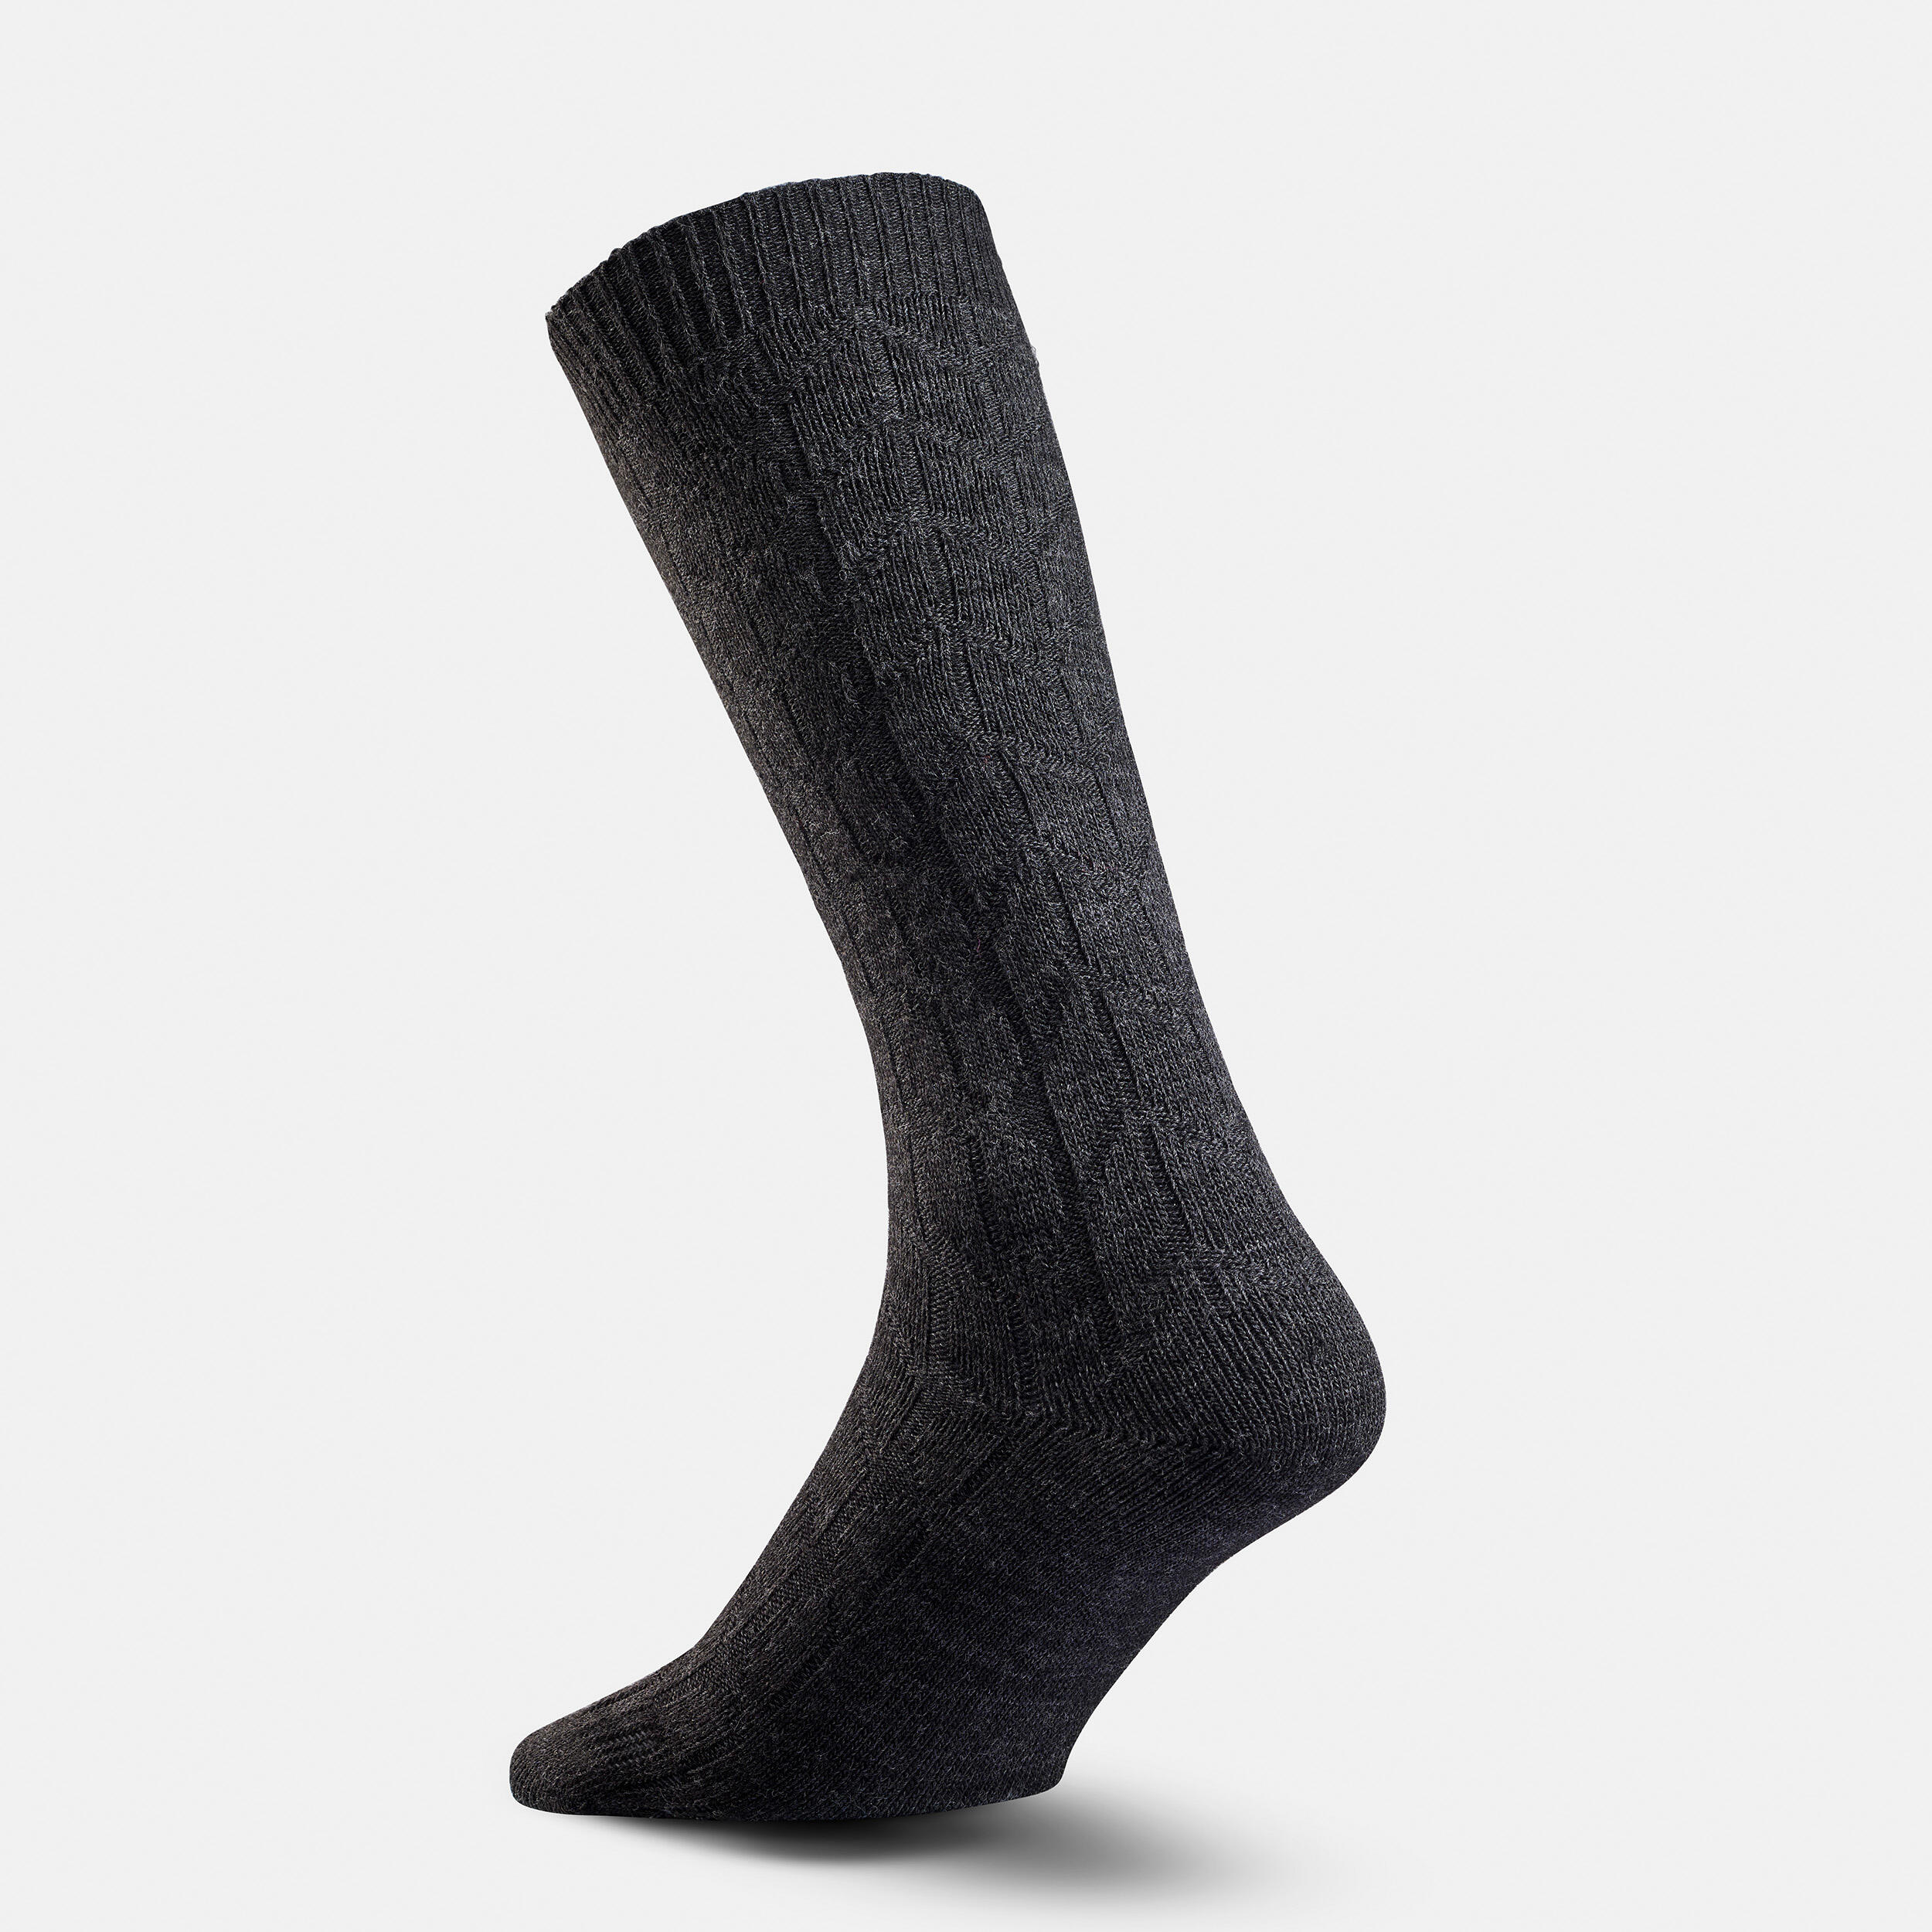 Warm hiking socks - SH100 MID JACQUARD - 2 pairs 8/10